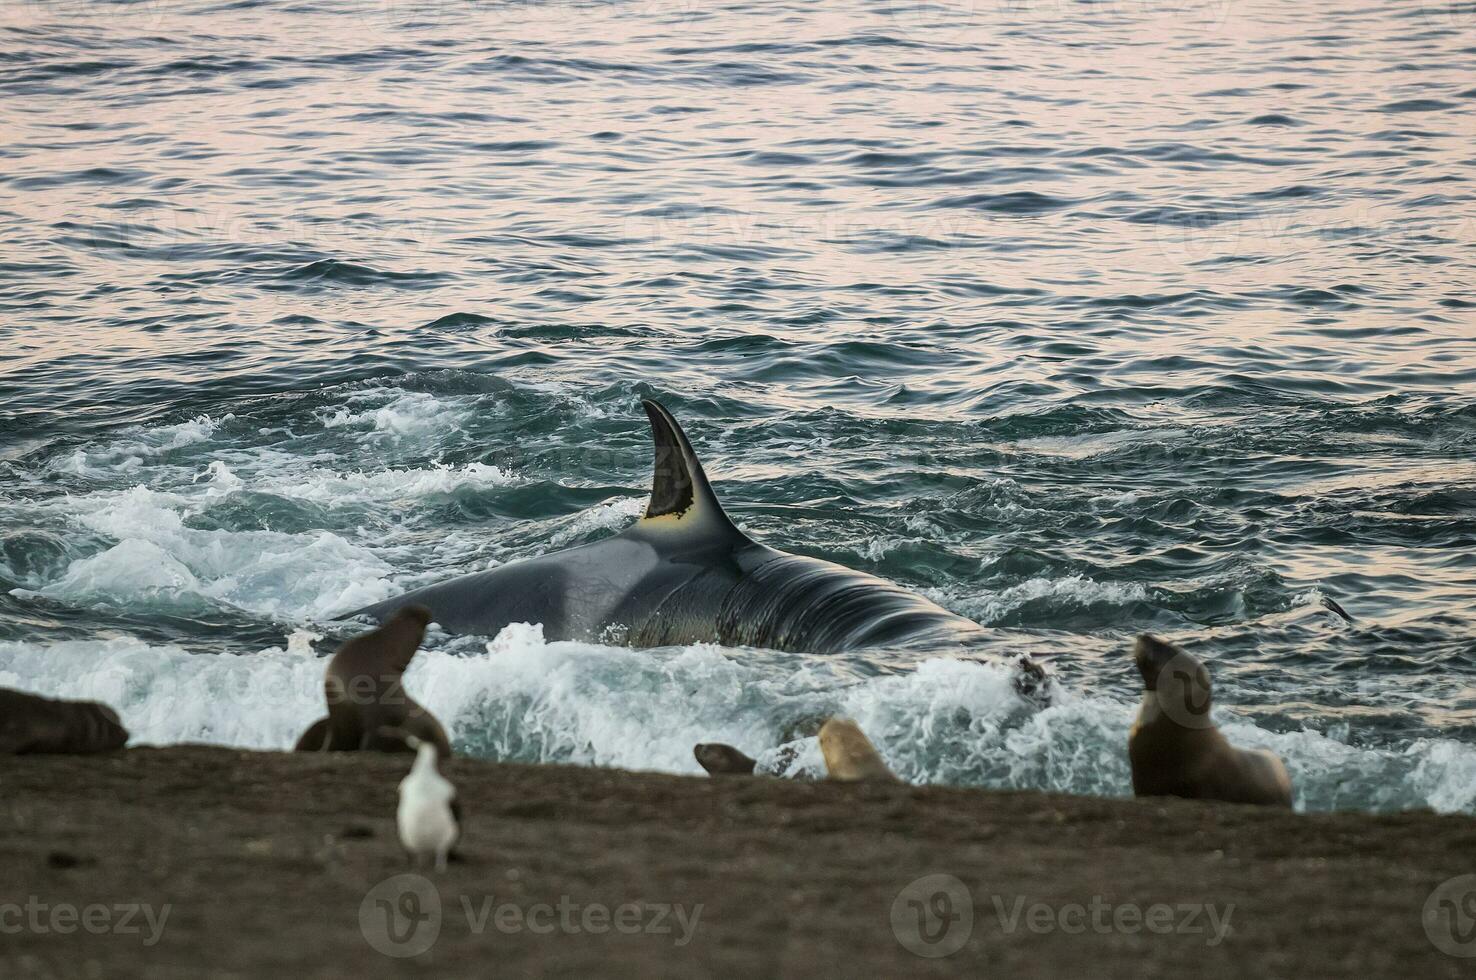 Orca hunt sea lions, Patagonia , Argentina photo